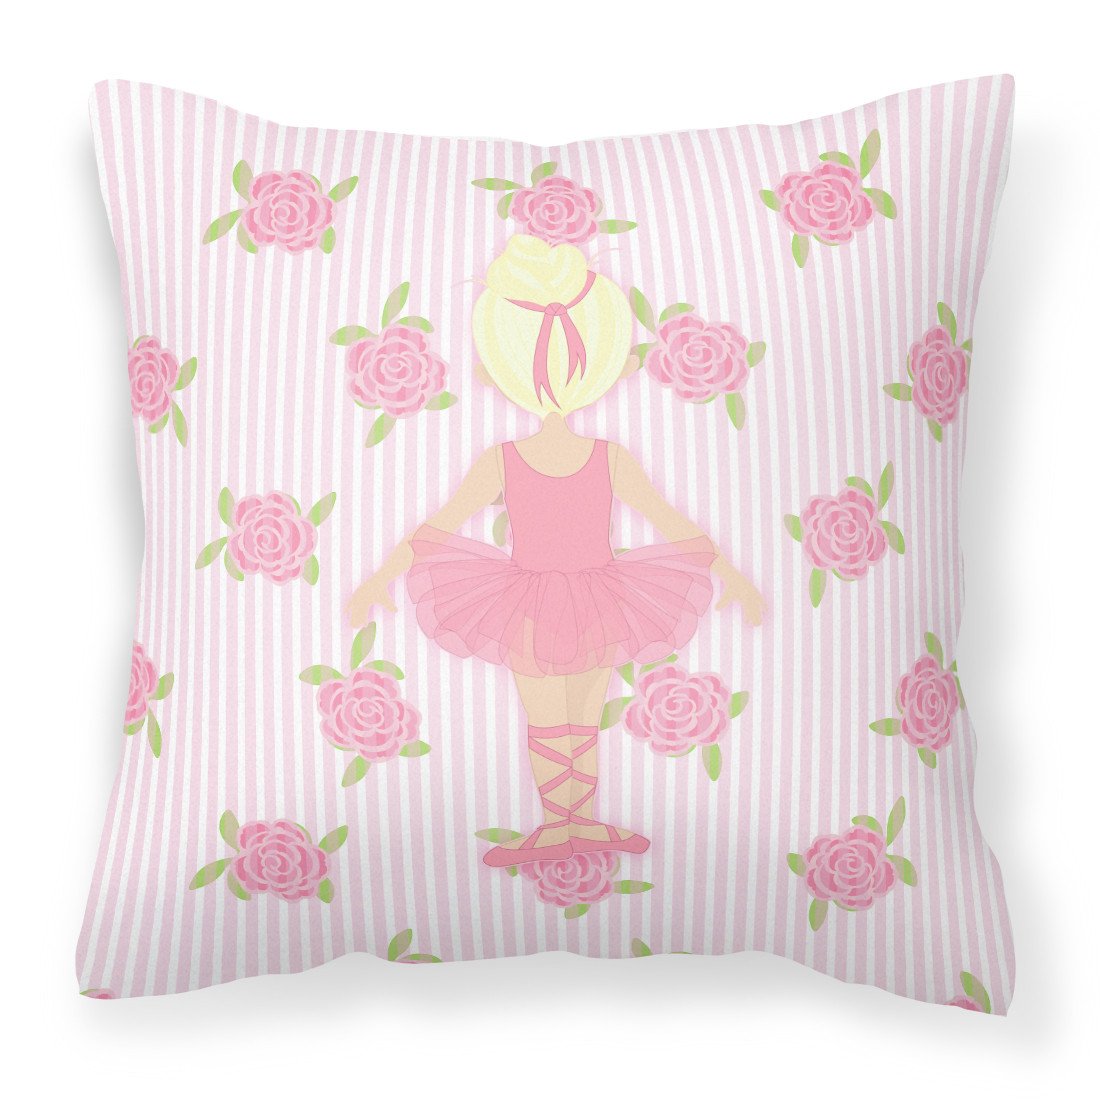 Ballerina Blonde Back Pose Fabric Decorative Pillow BB5167PW1818 by Caroline's Treasures